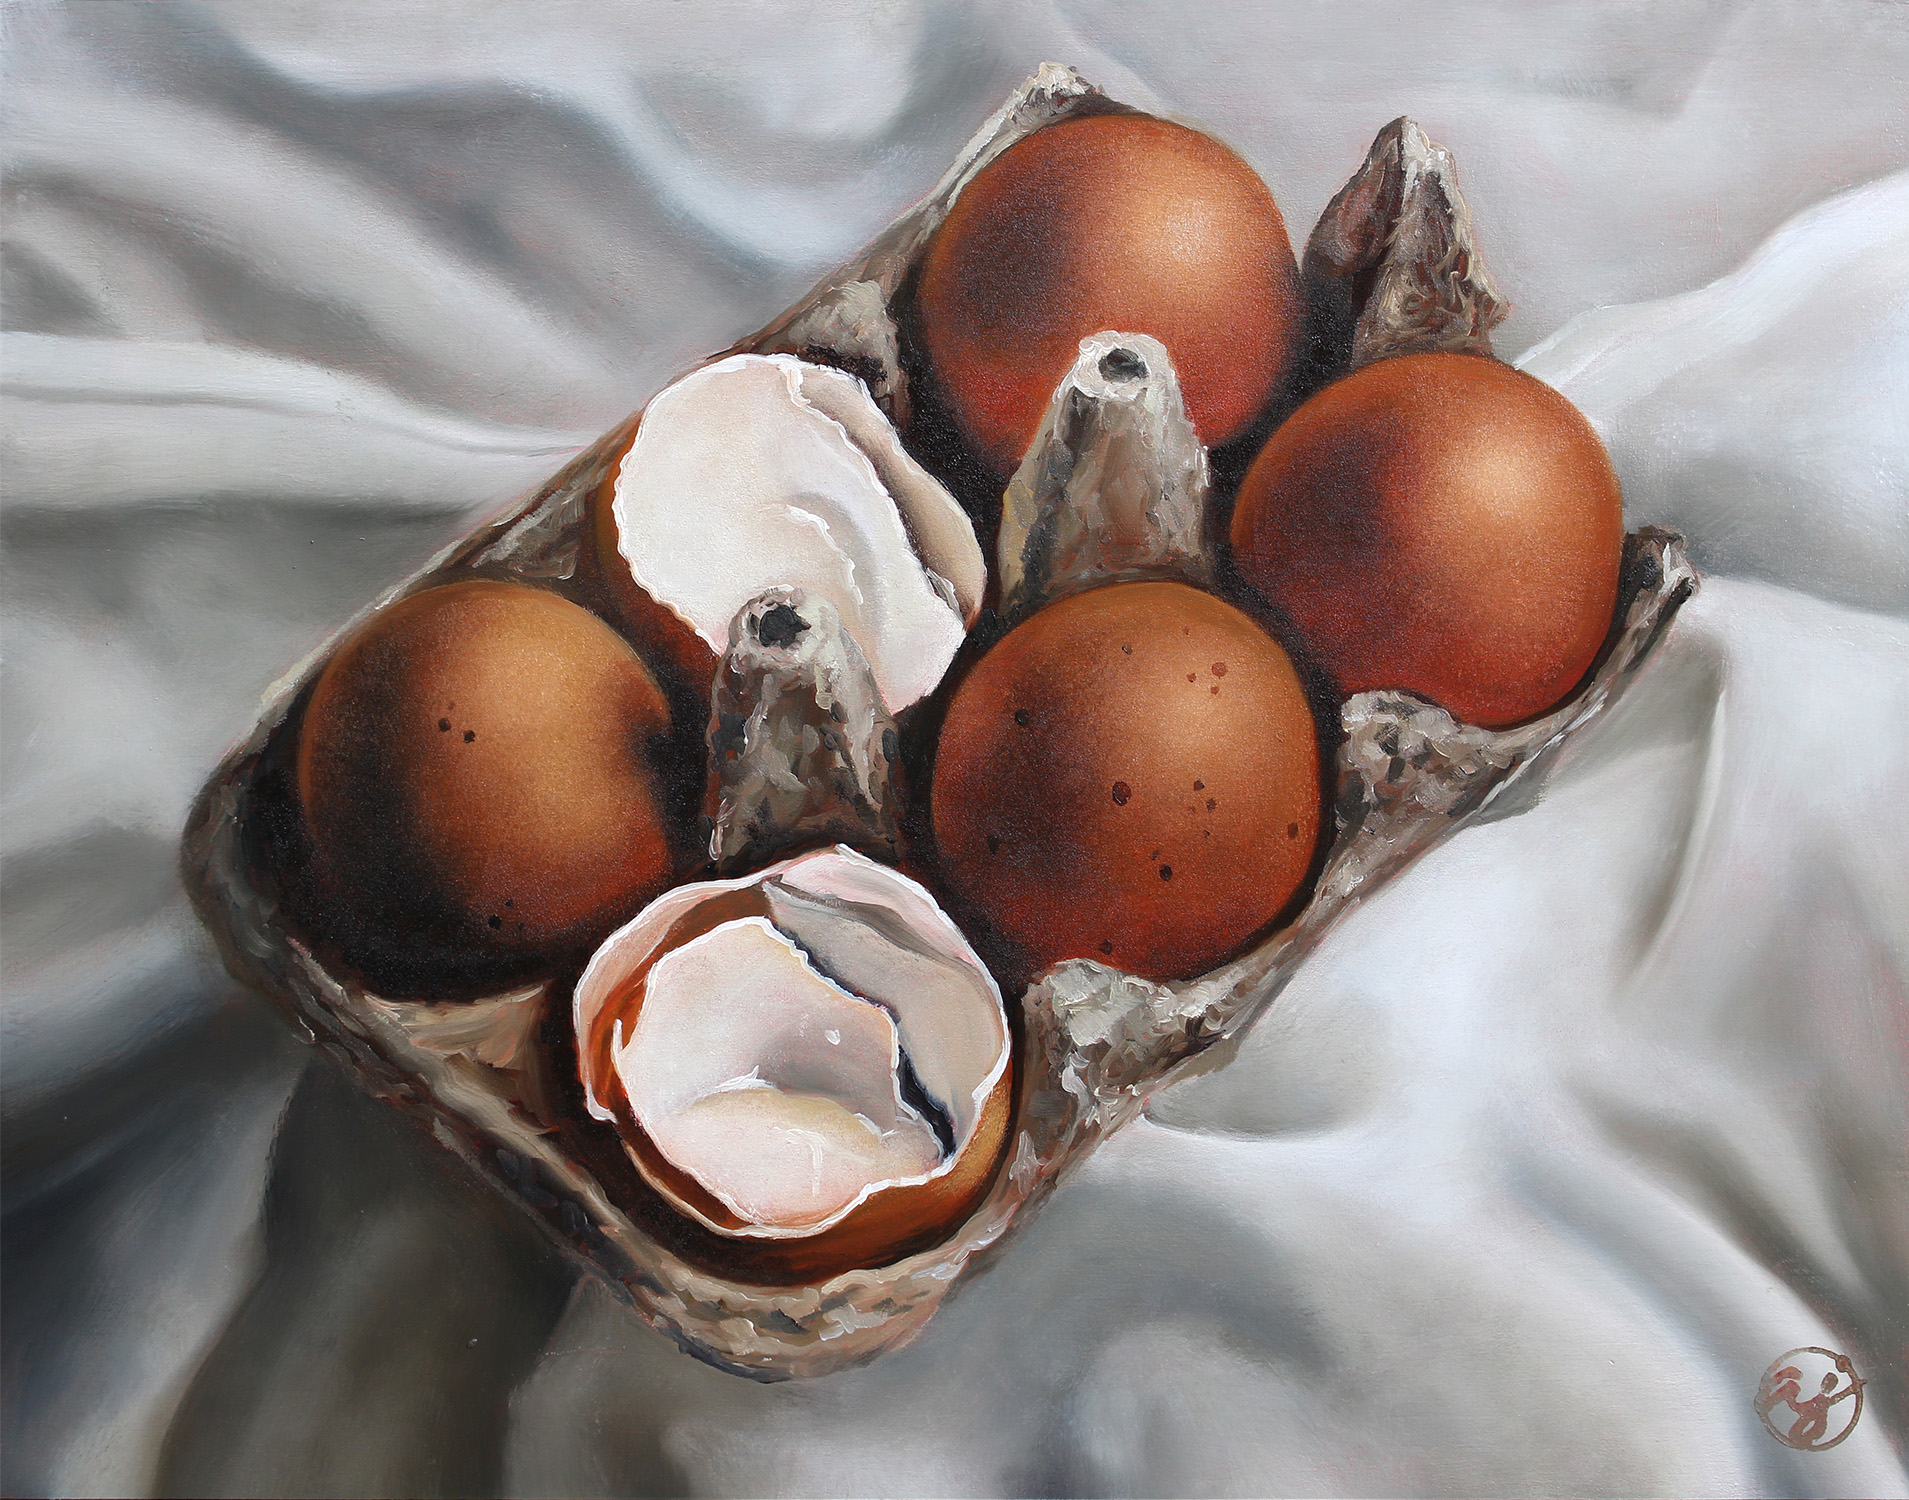 "Egg Carton" 11x14 Original Oil Painting by Abra Johnson